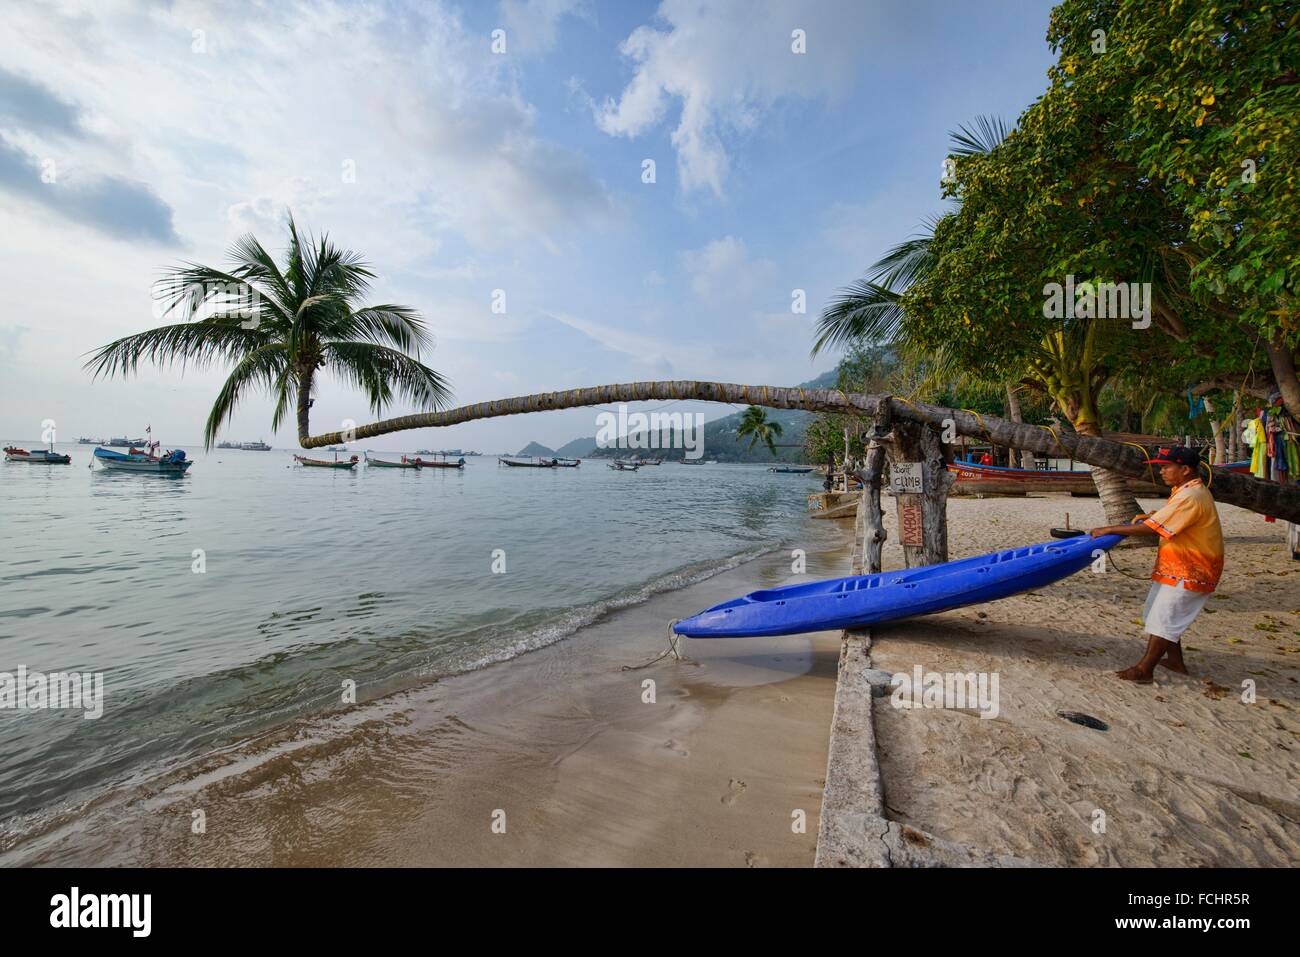 Kajak und schiefen Kokospalme am Sairee Beach, Koh Tao, Thailand  Stockfotografie - Alamy